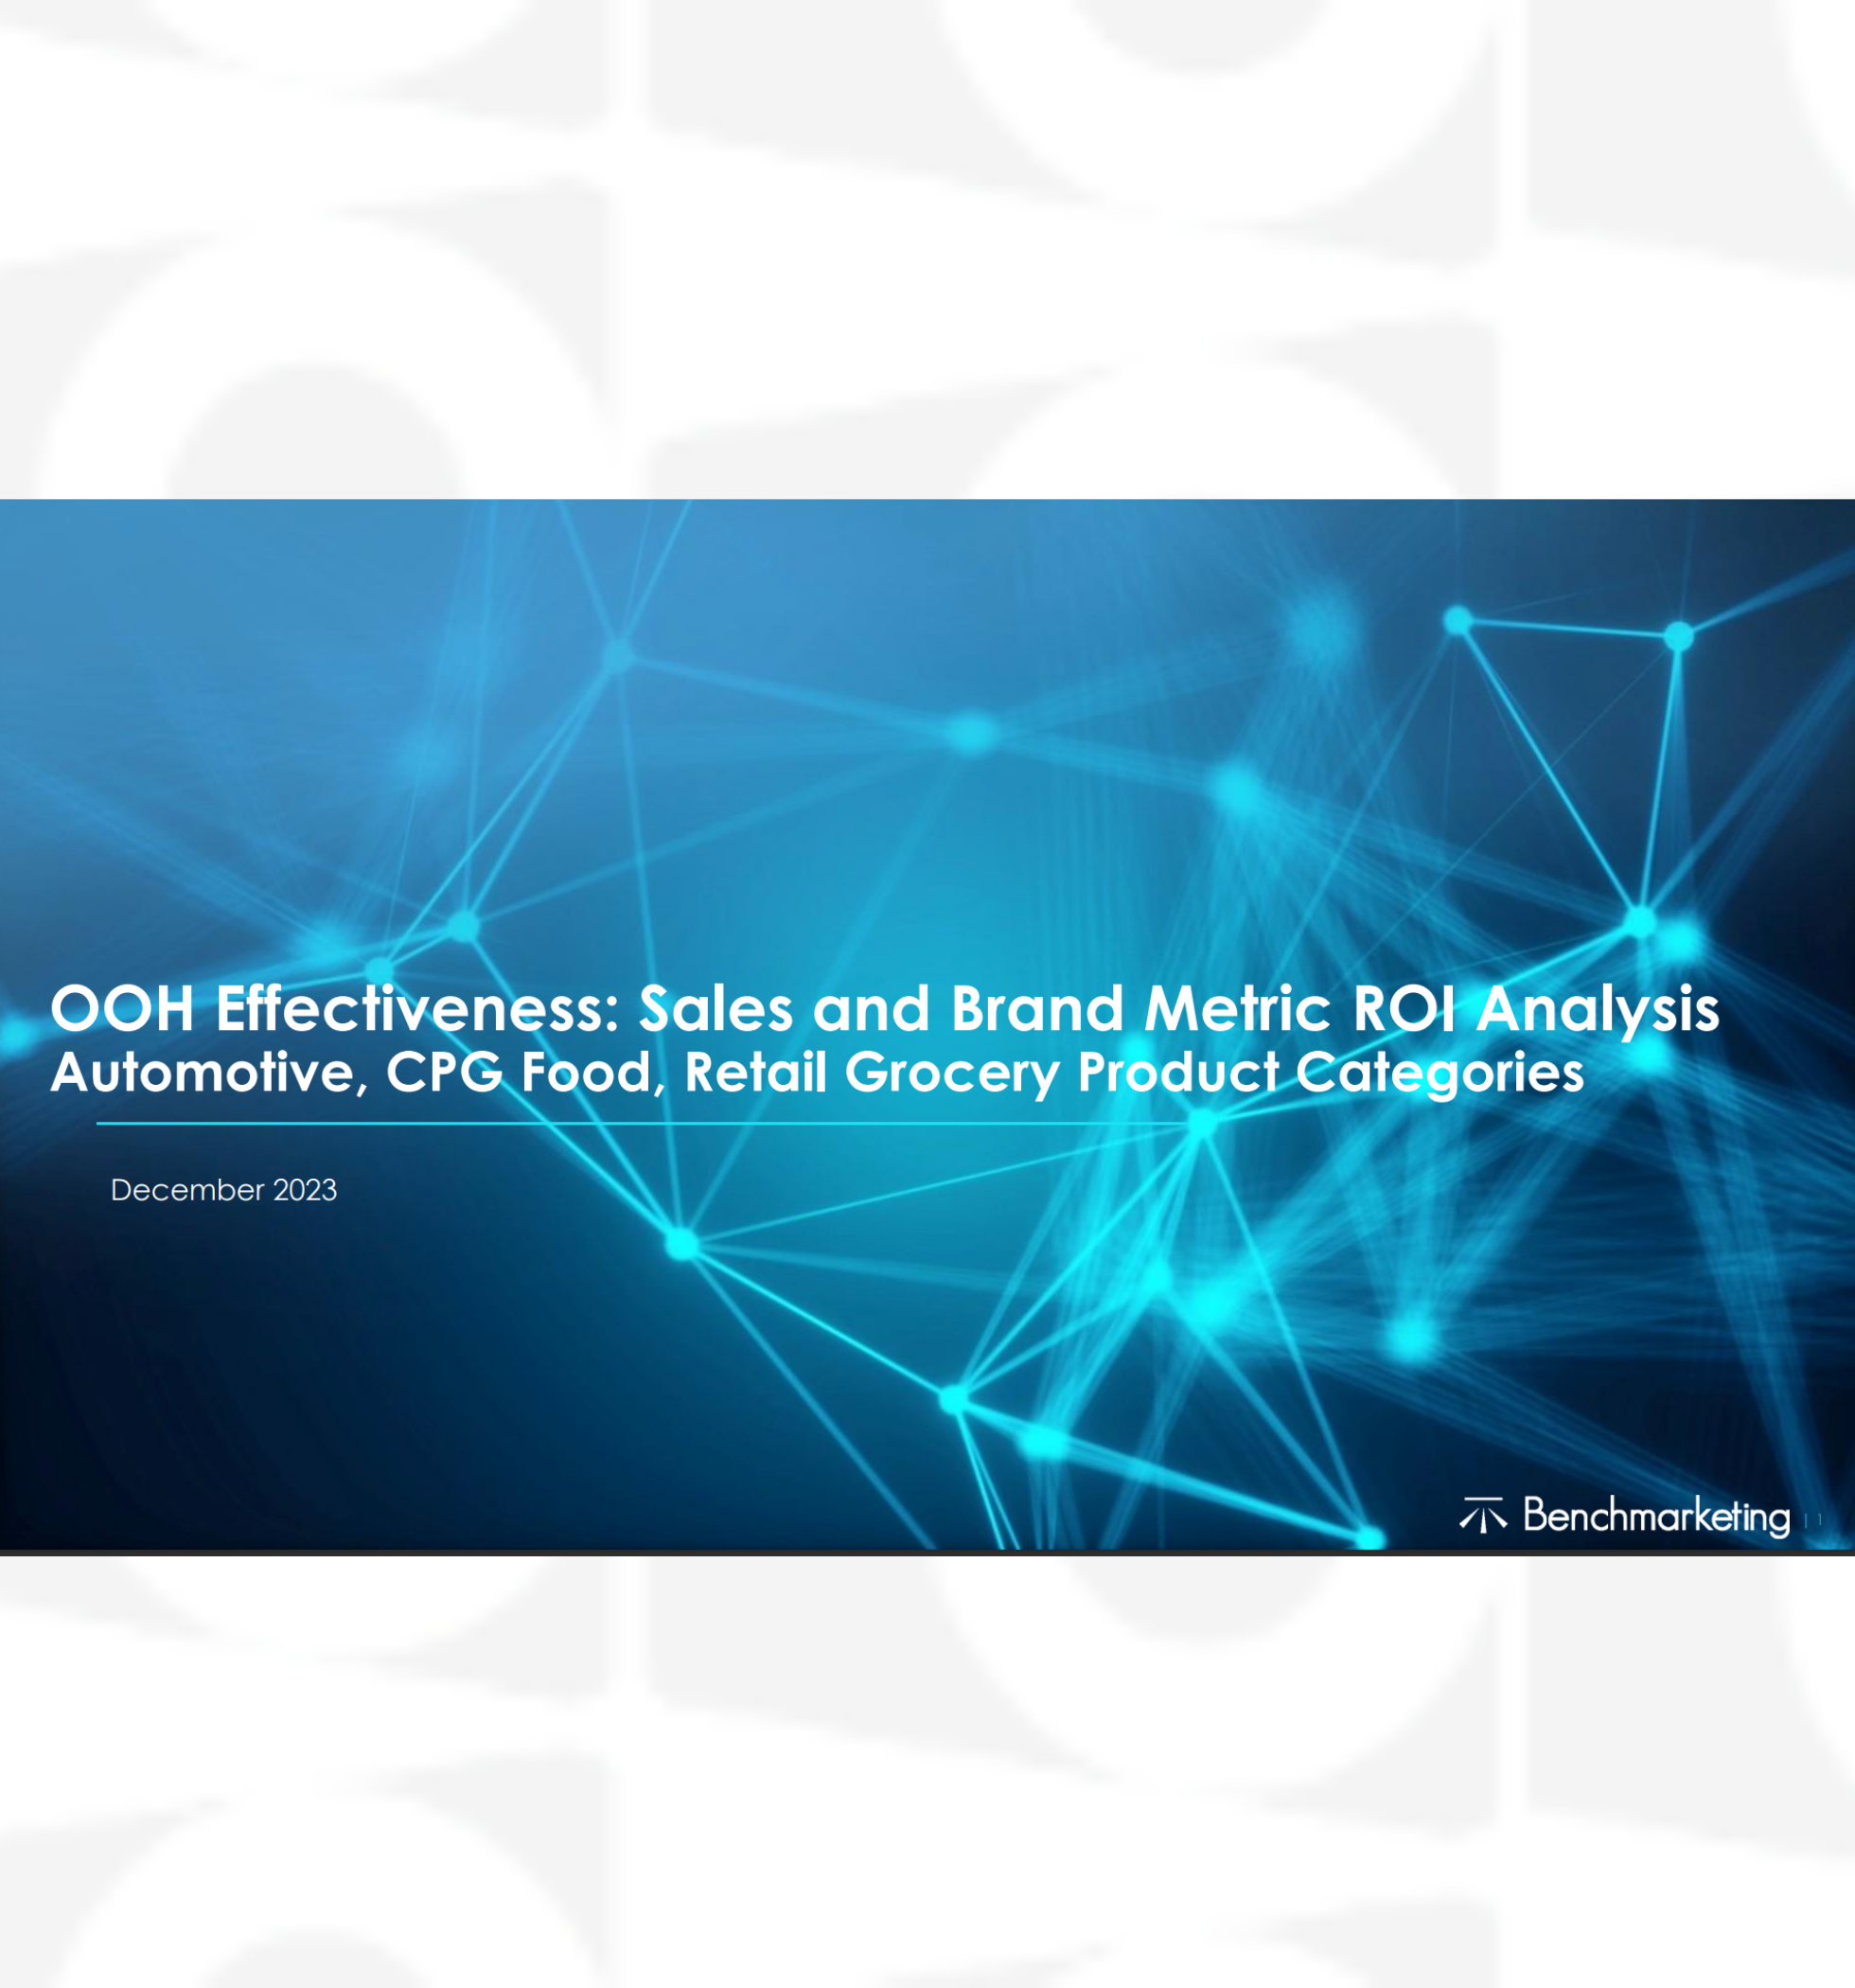 Benchmarketing OOH Media Effectiveness: Sales and Brand Metric ROI Analysis